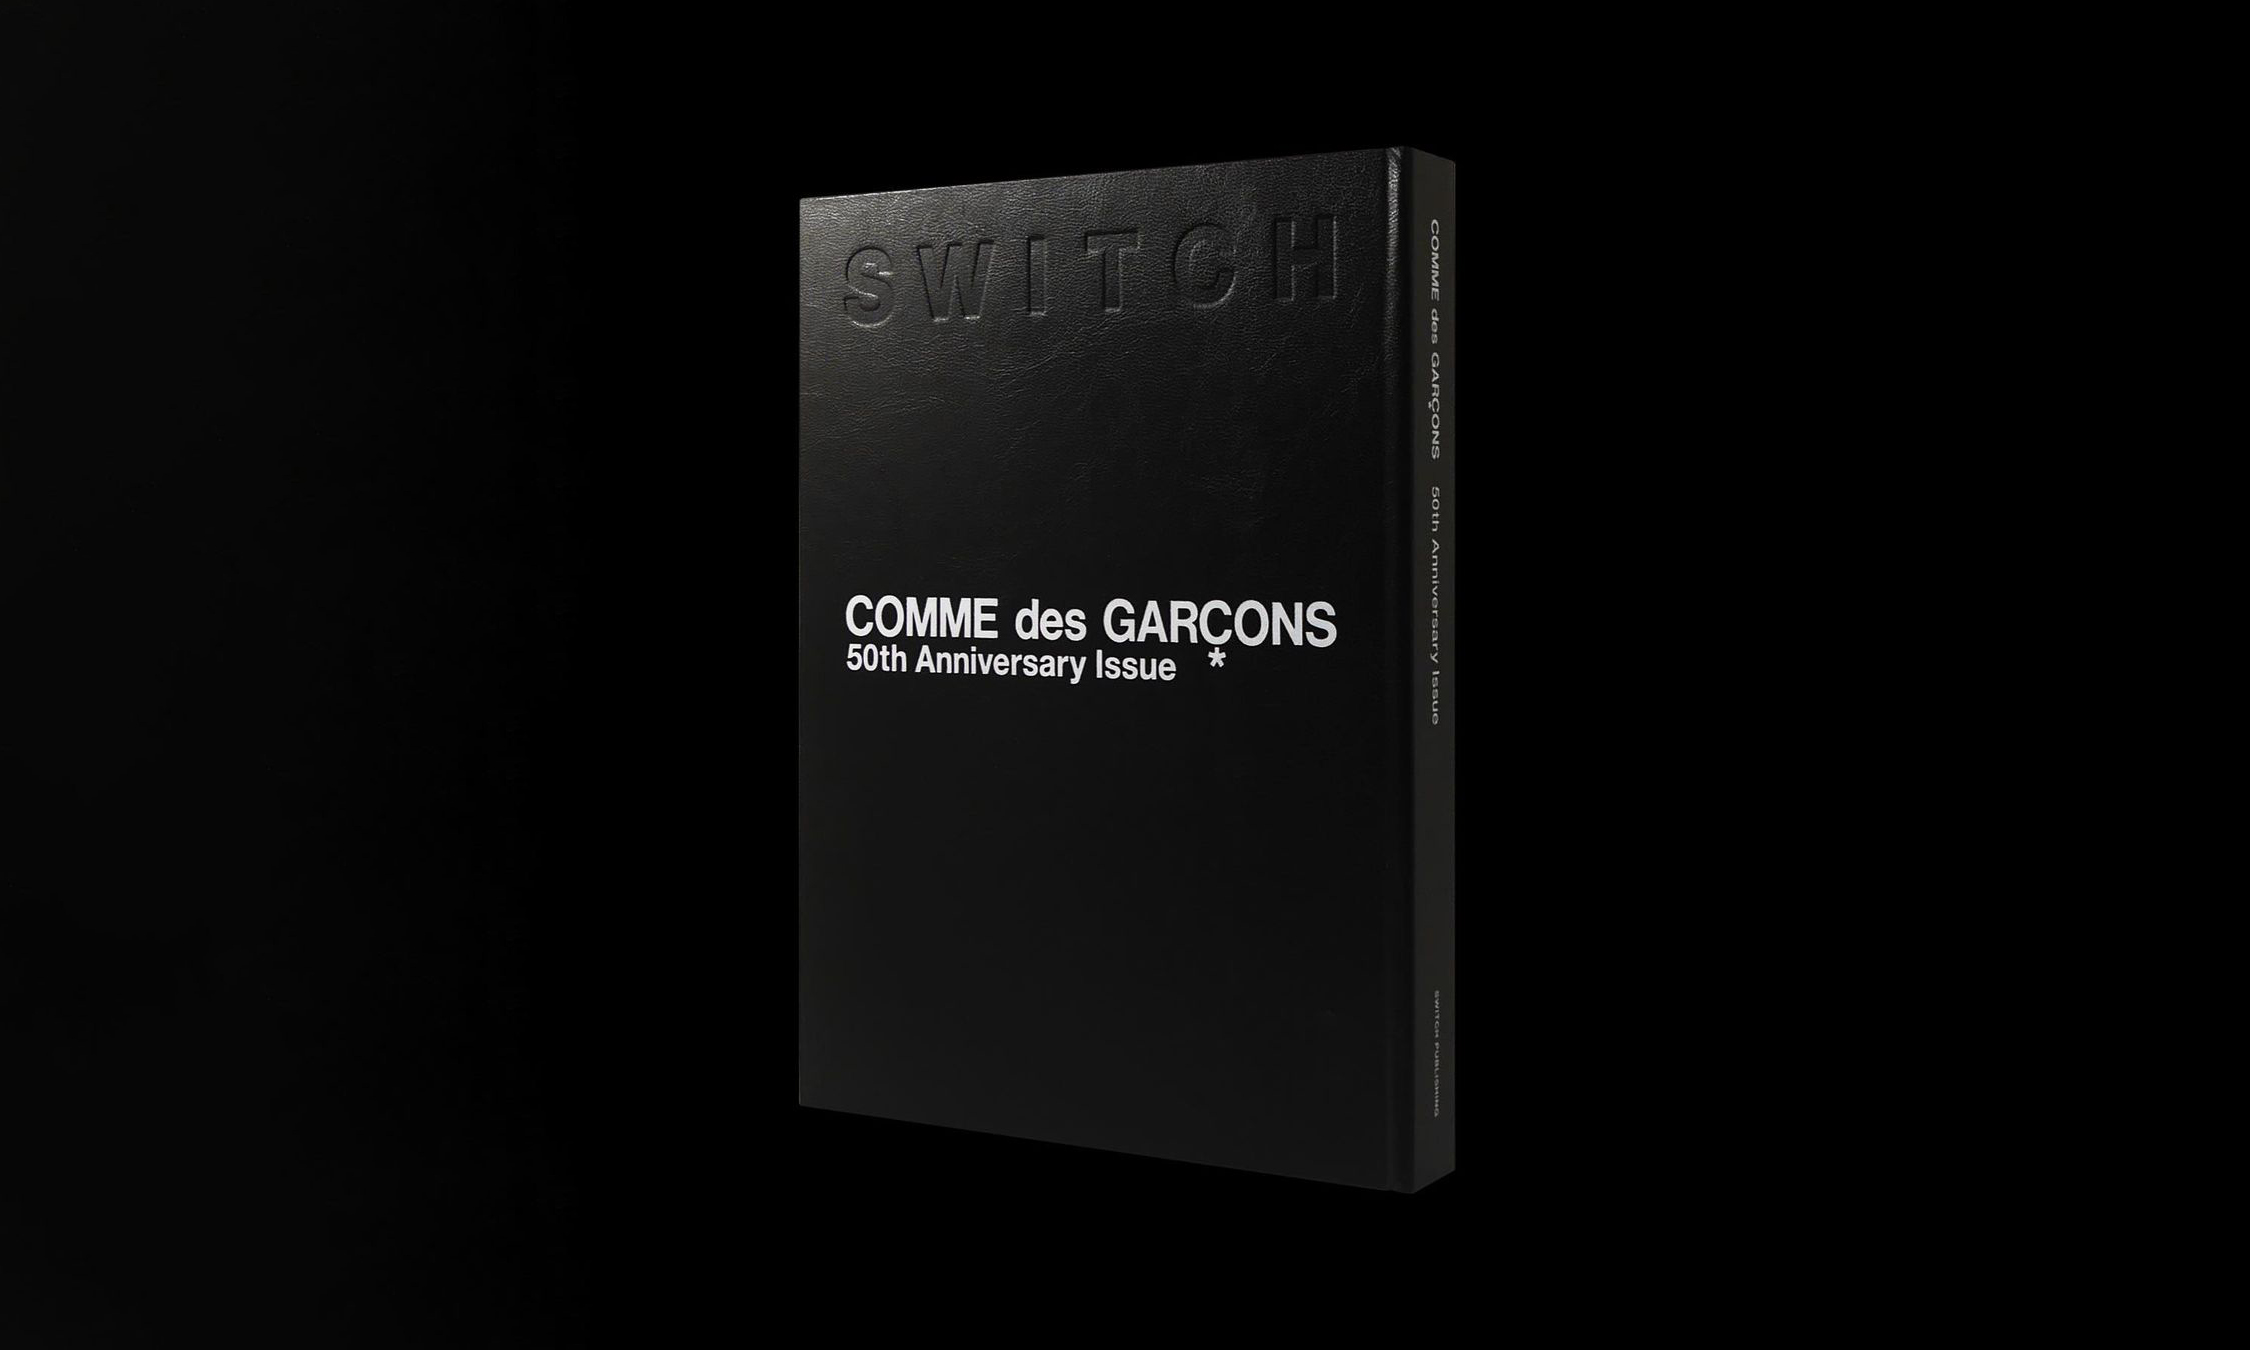 《SWITCH COMME des GARÇONS》50 周年纪念版书籍已发售